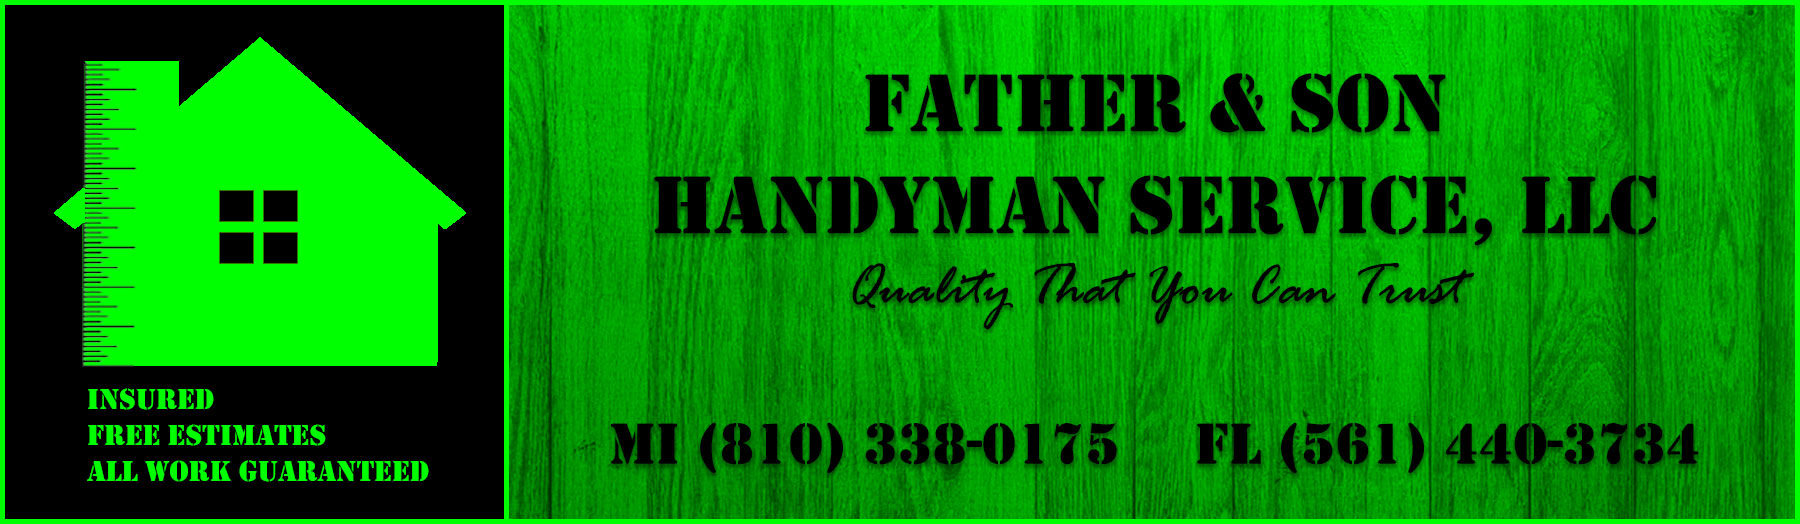 Father & Son Handyman Service